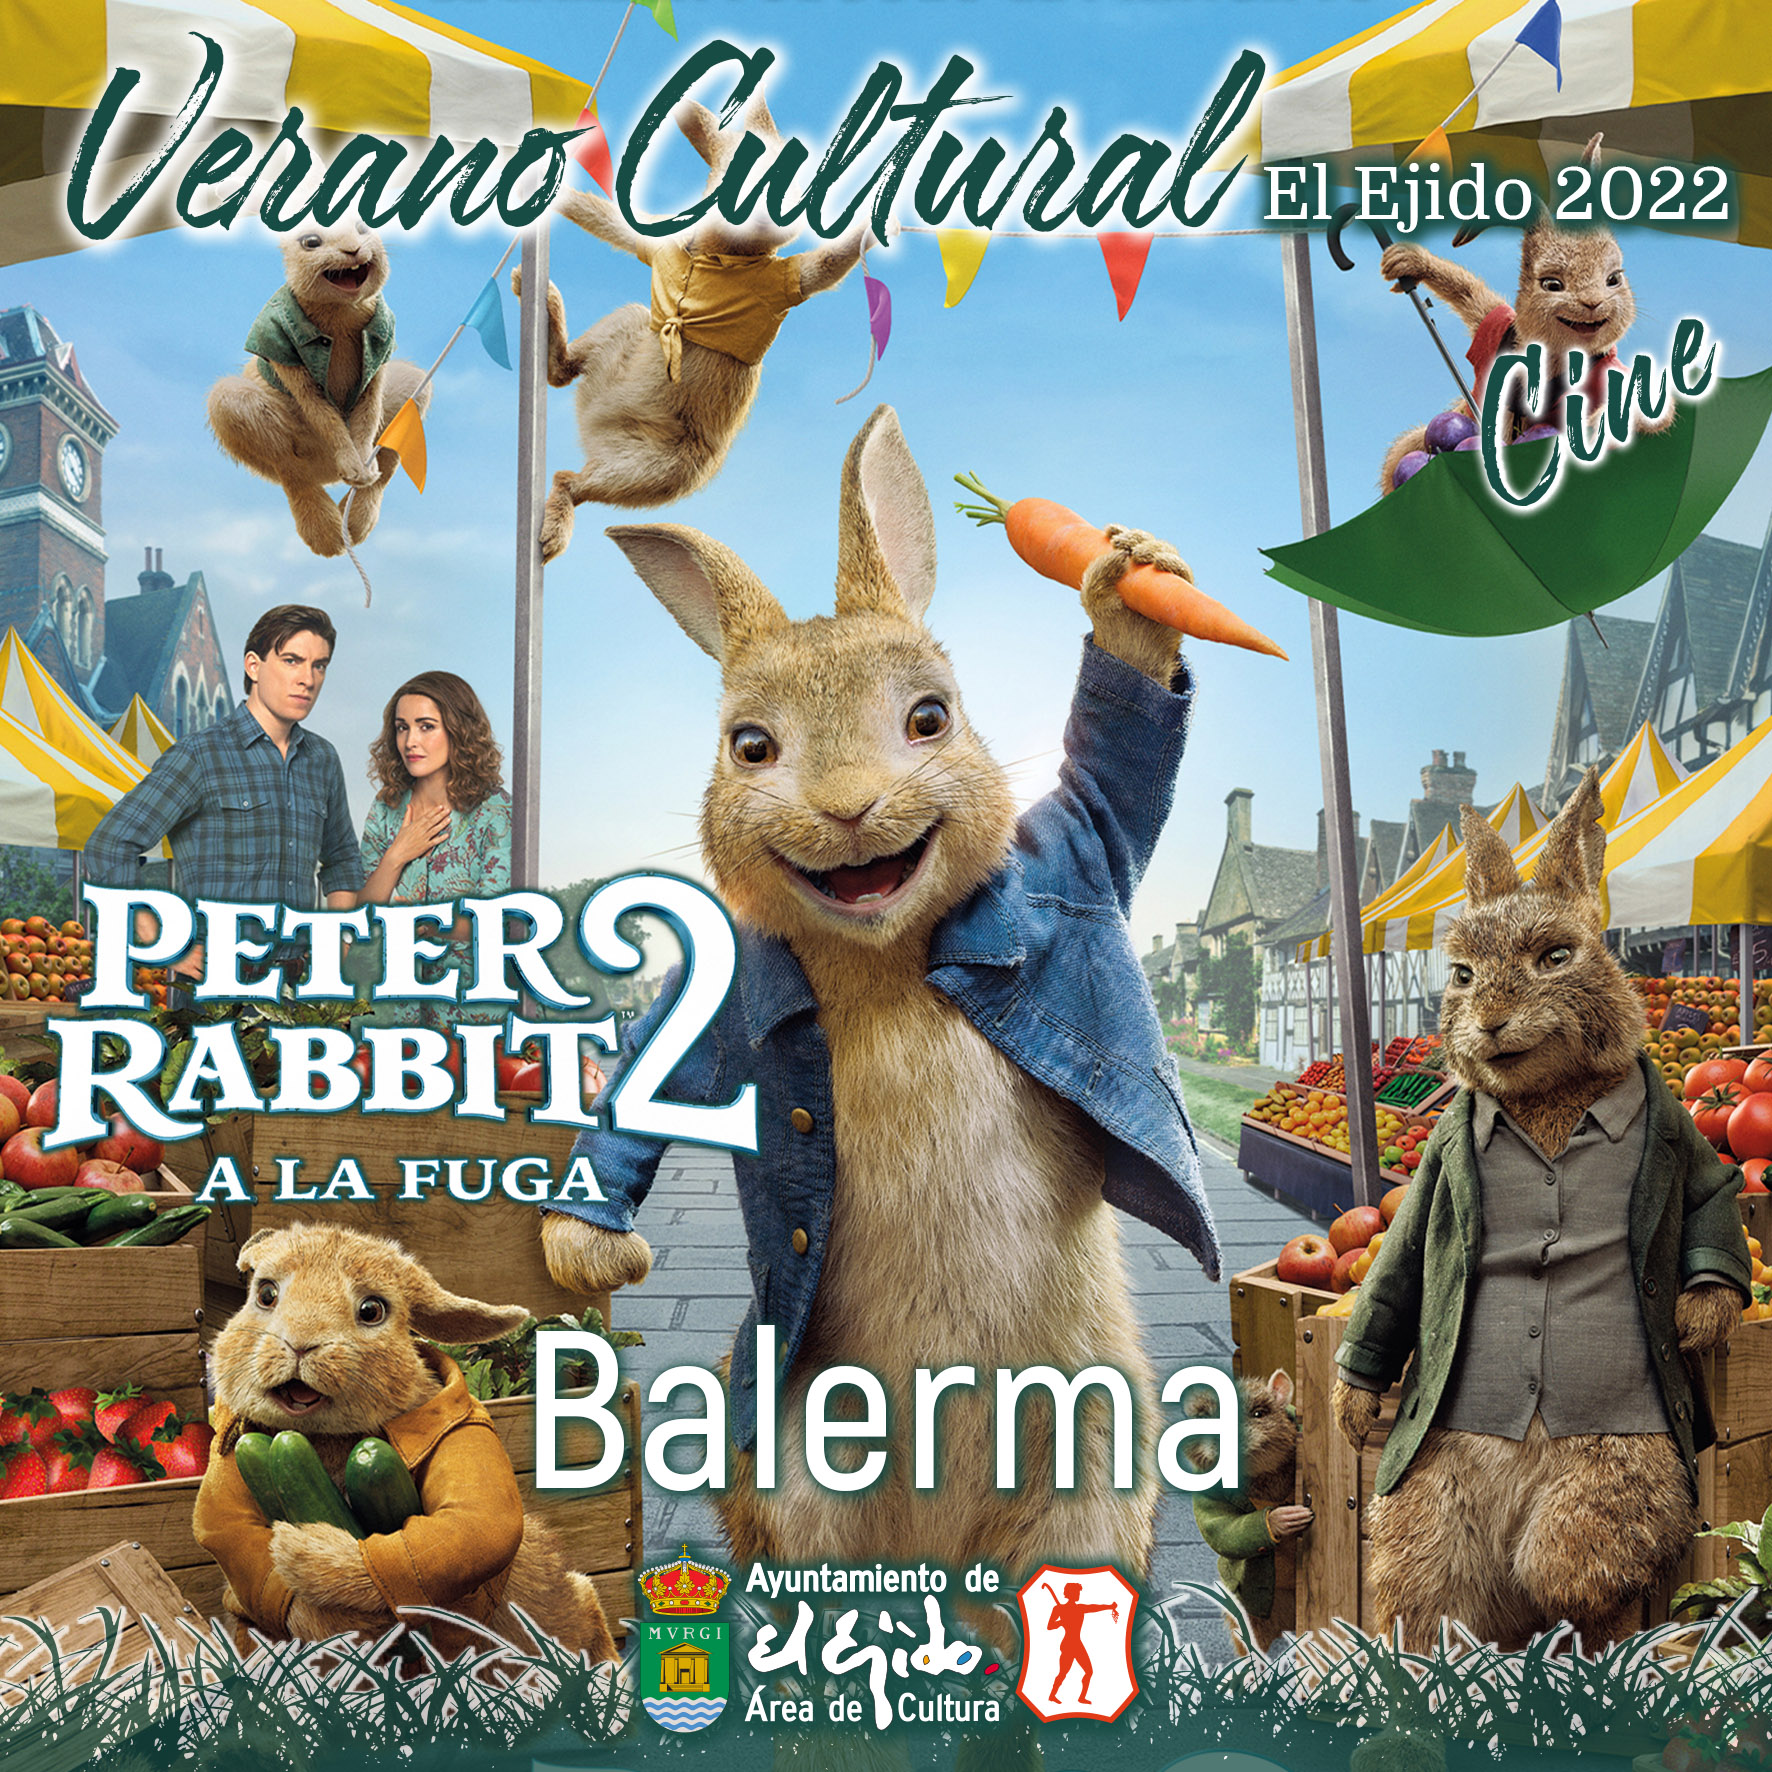 Verano Cultural 2022 de El Ejido – Cine – Balerma – Peter Rabbit 2 a la fuga